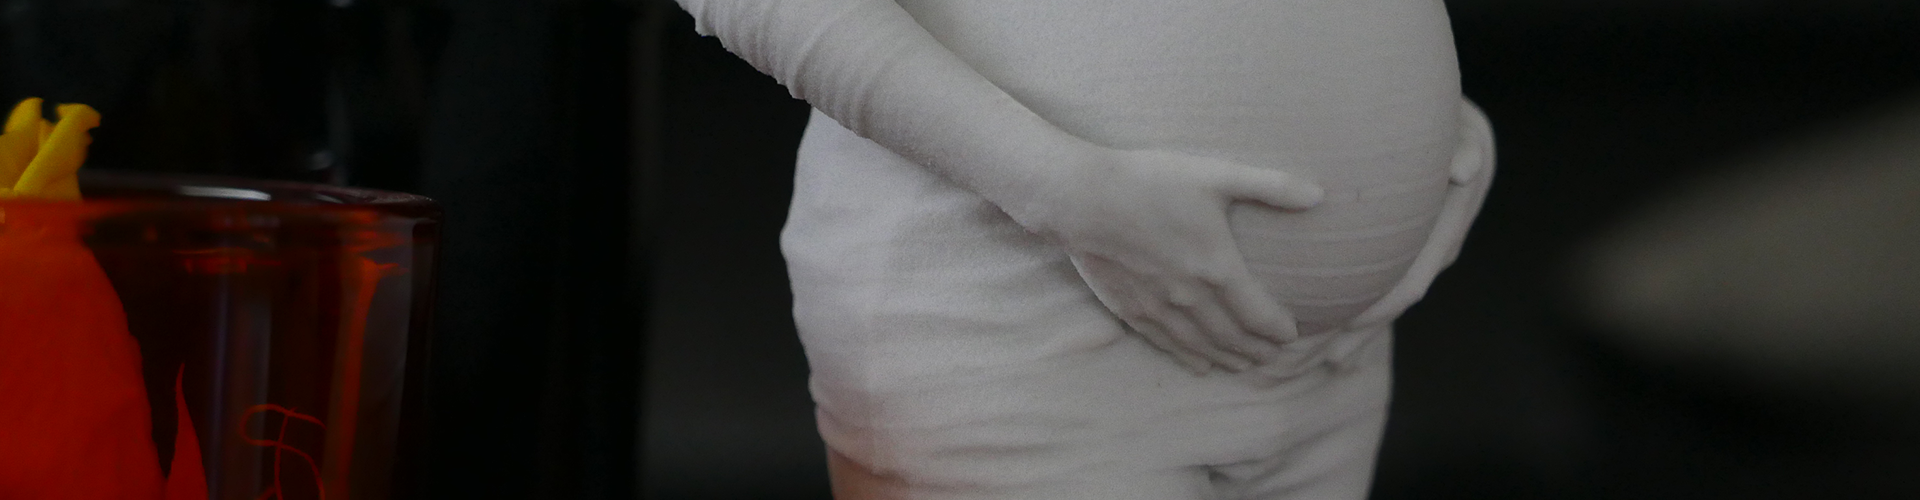 Zwangerschapsbuikje - Zwangere buik - 3D print - 3D fotografie - buik print - impression ventre – print belly